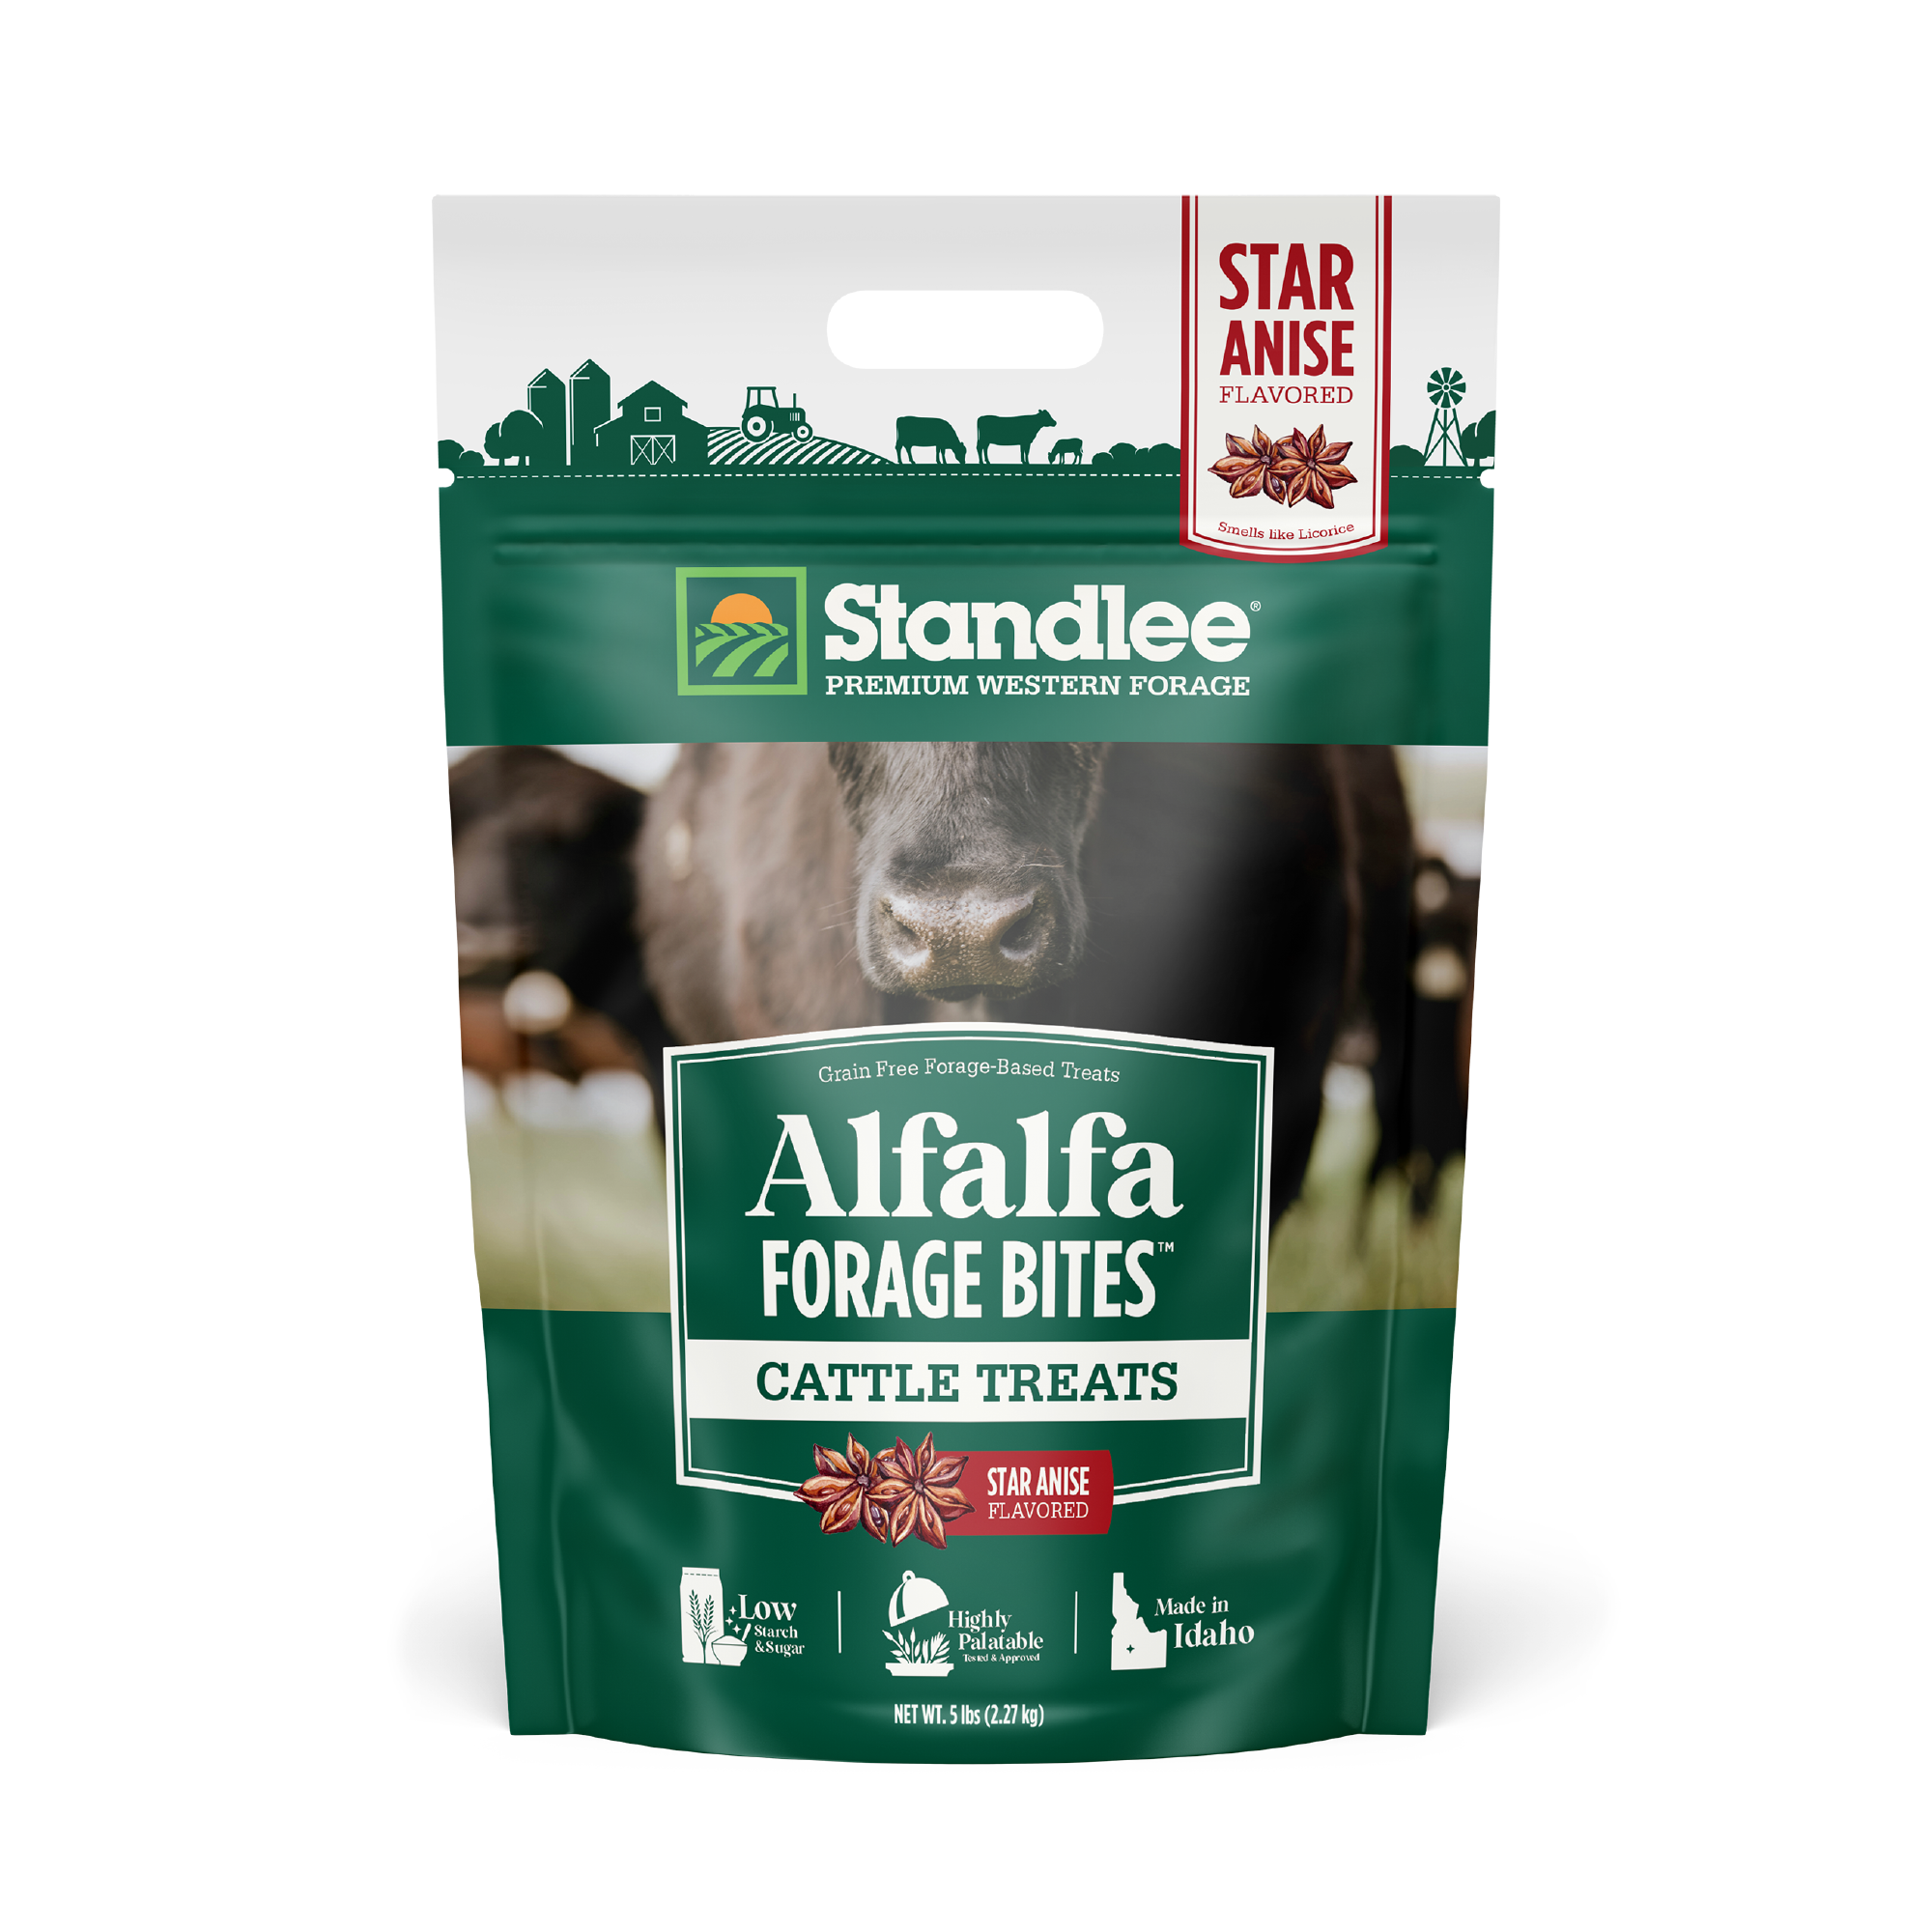 Standlee Premium Western Forage Alfalfa Forage Bites Cattle Treats - 1175-41013-0-0